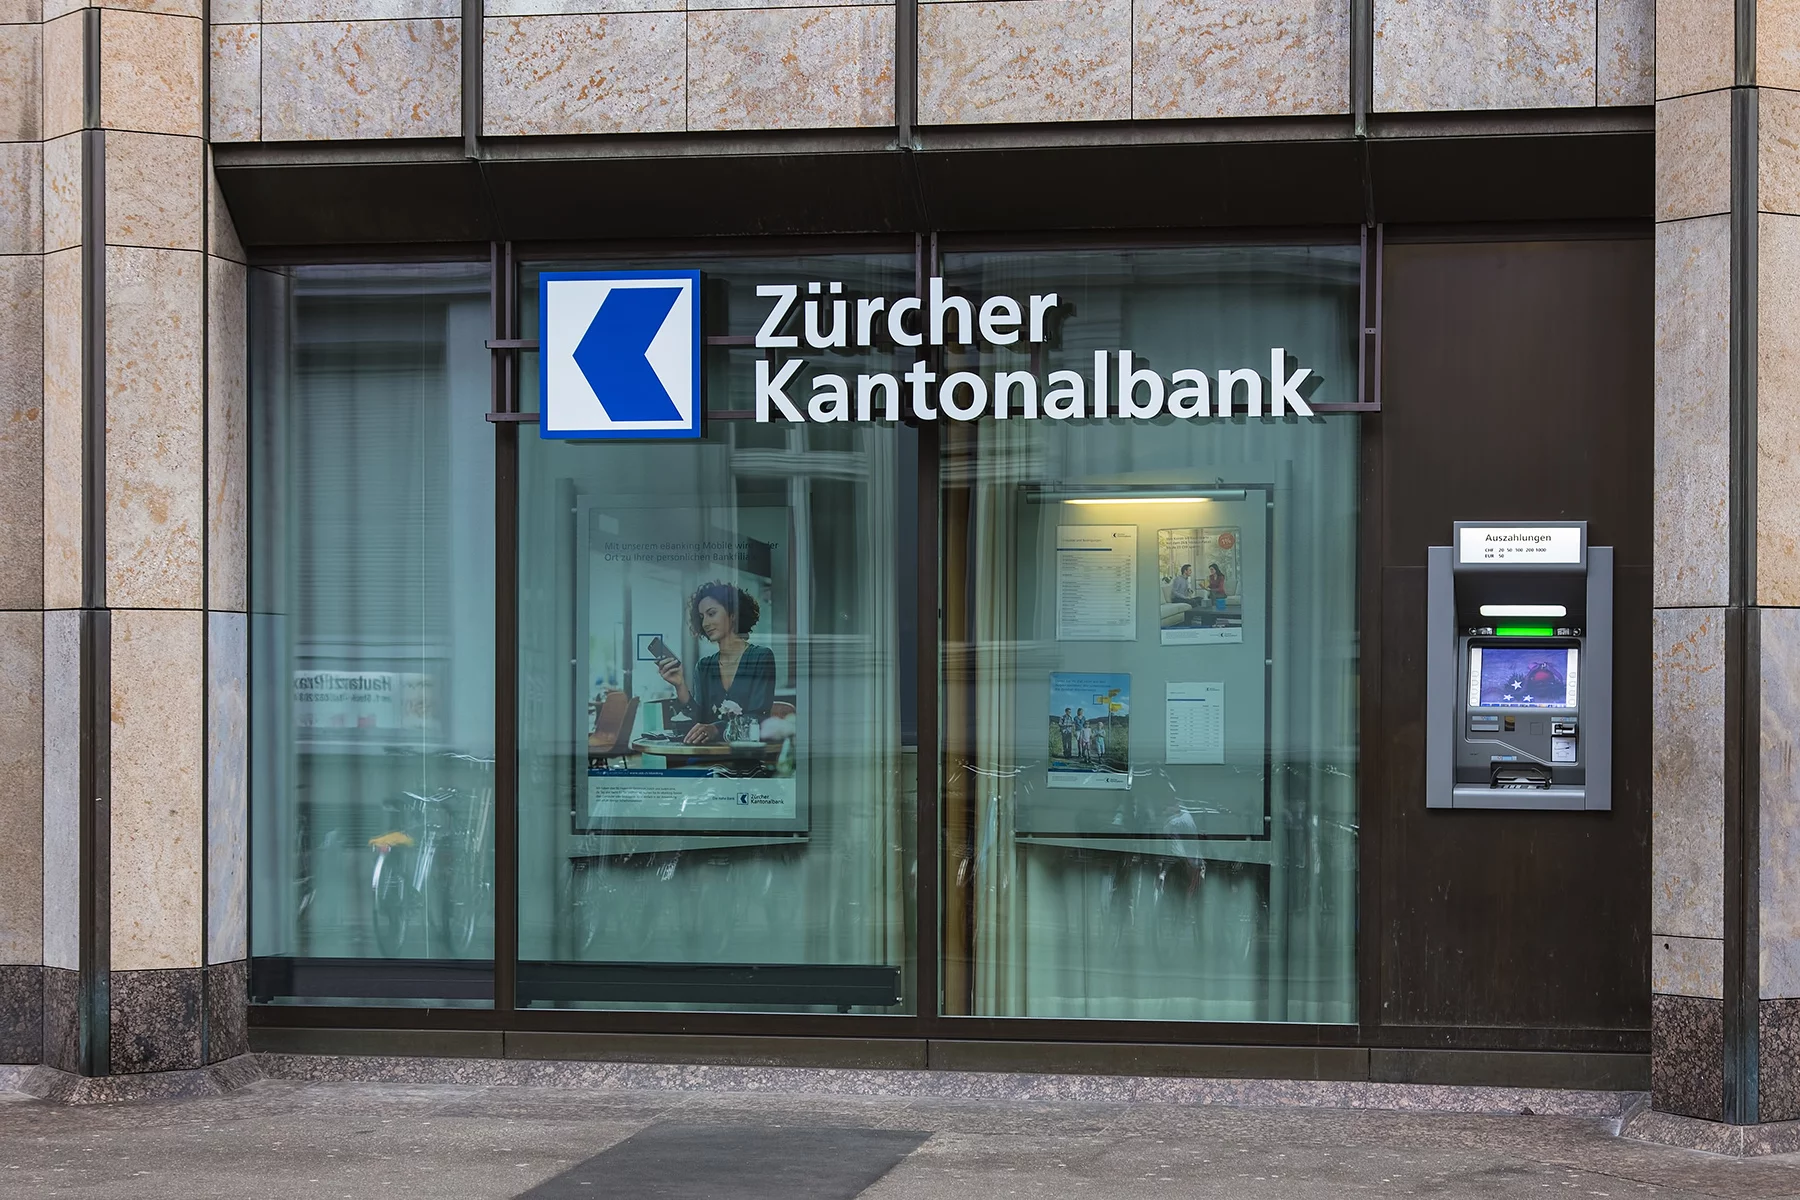 The Zurich Cantonal Bank